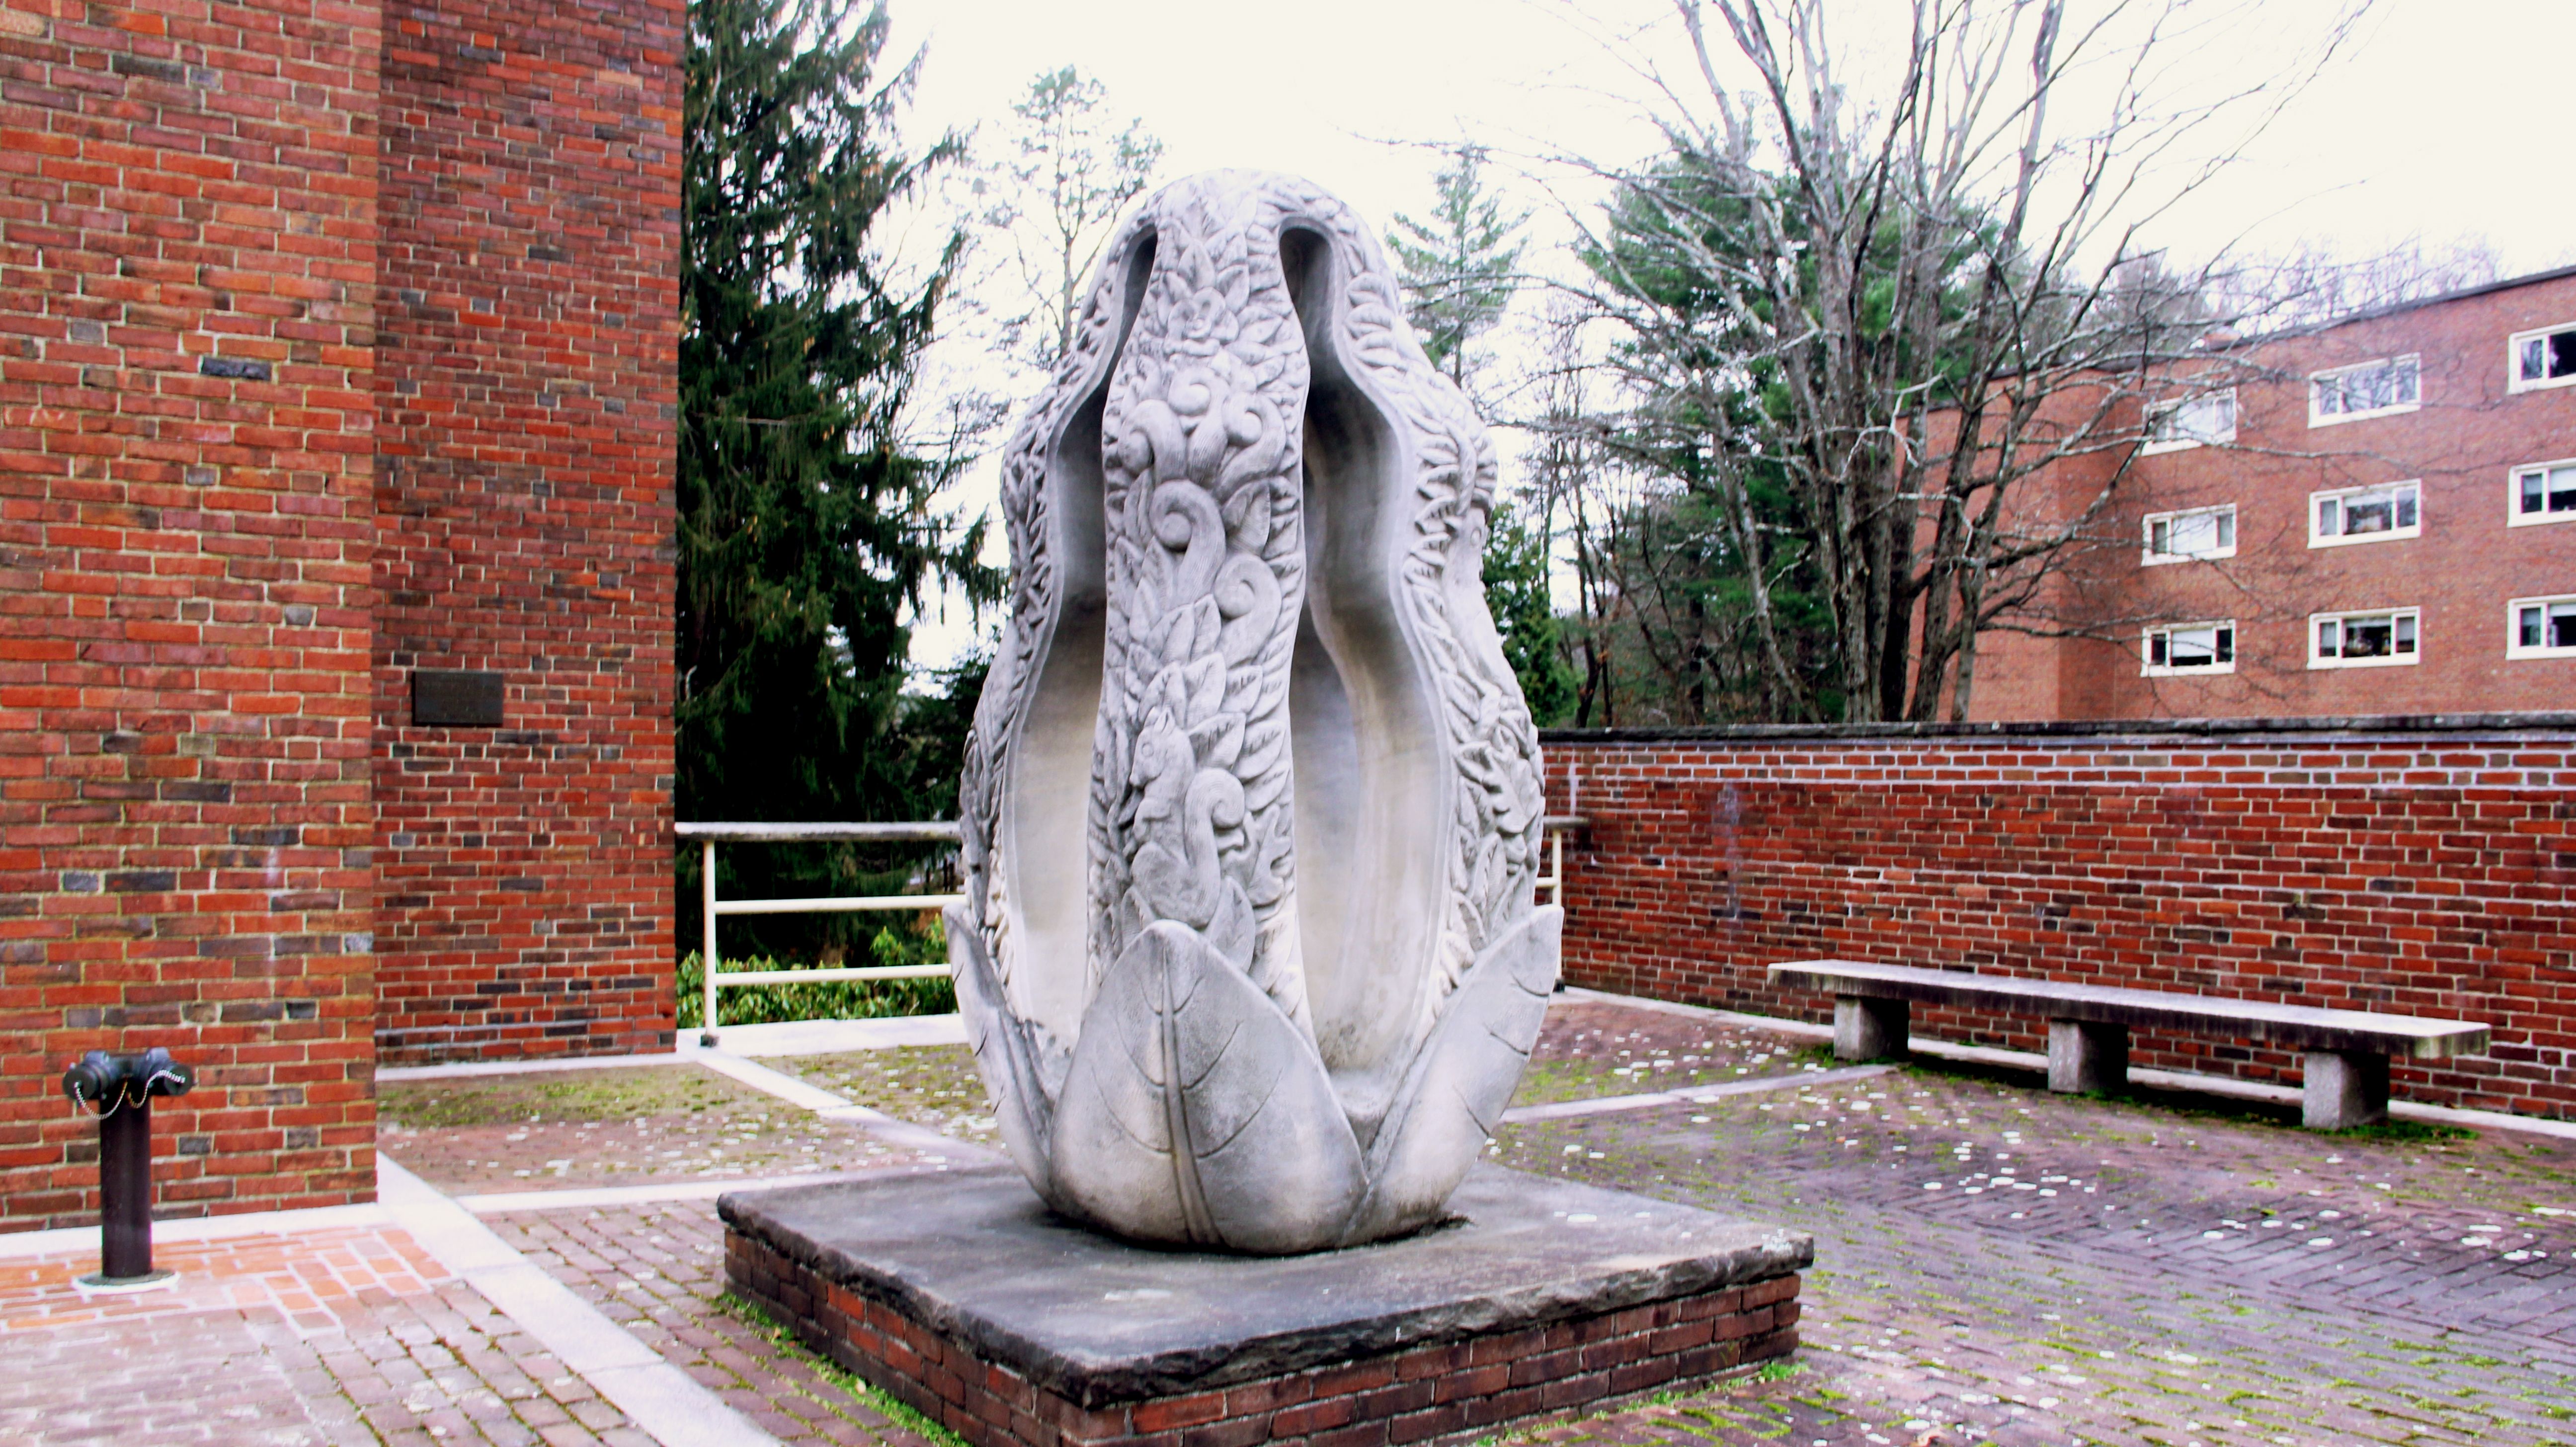 Sculptures of the vulva